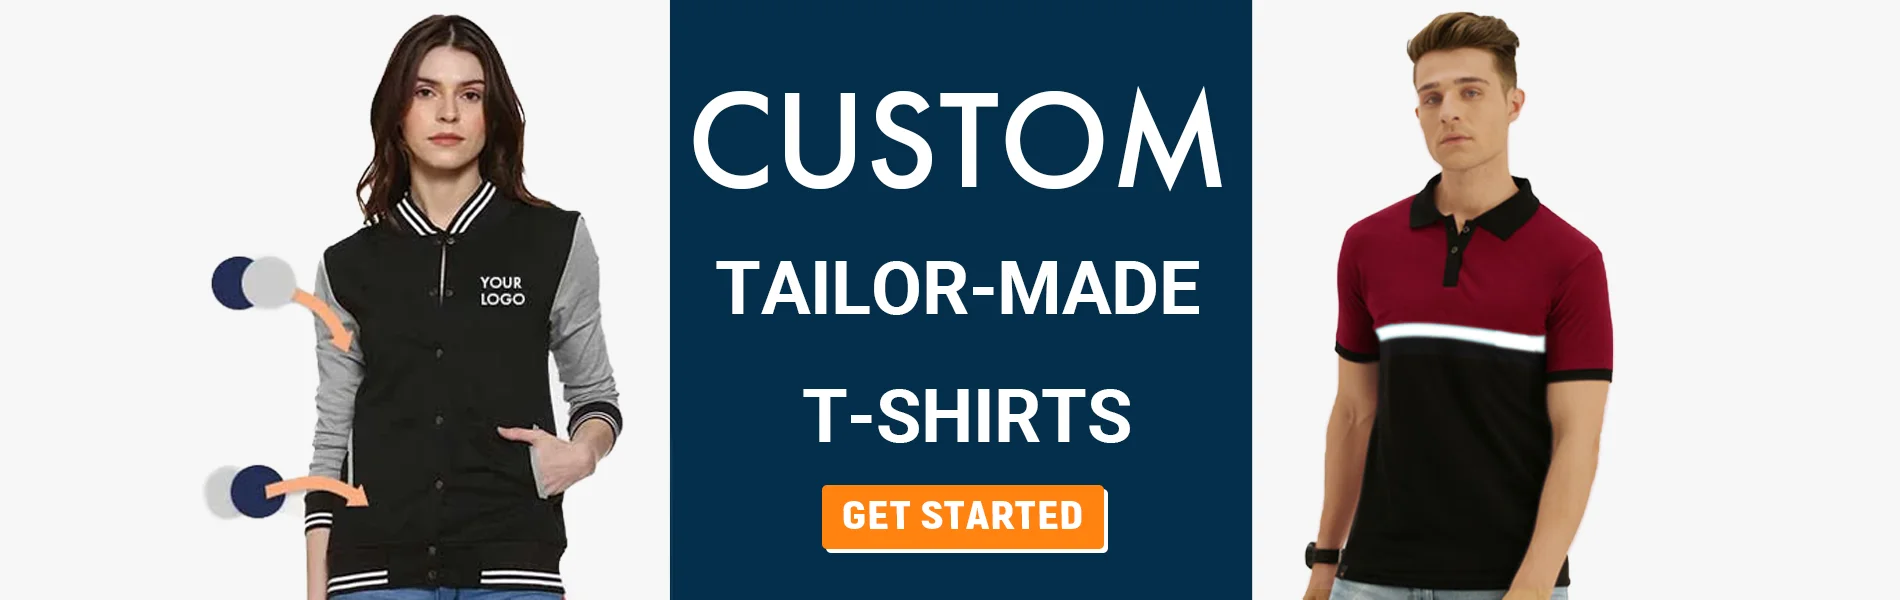 custom-tailormade-t-shirts aizawl.webp